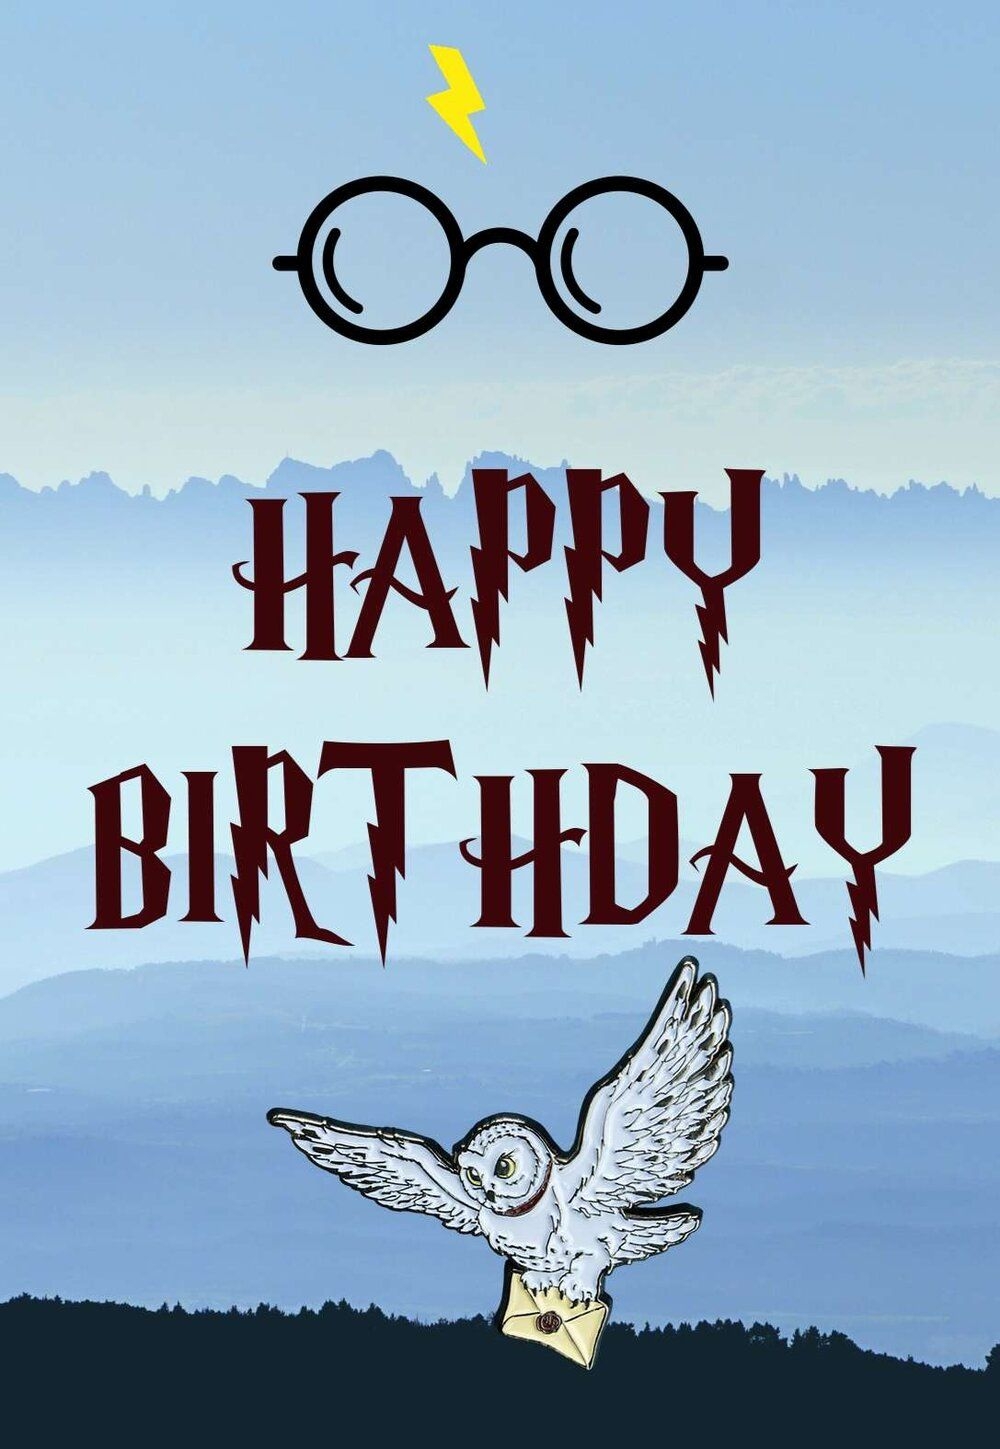 Harry Potter Birthday Cards PRINTBIRTHDAY CARDS Harry Potter Birthday Cards Happy Birthday Harry Potter Harry Potter Birthday